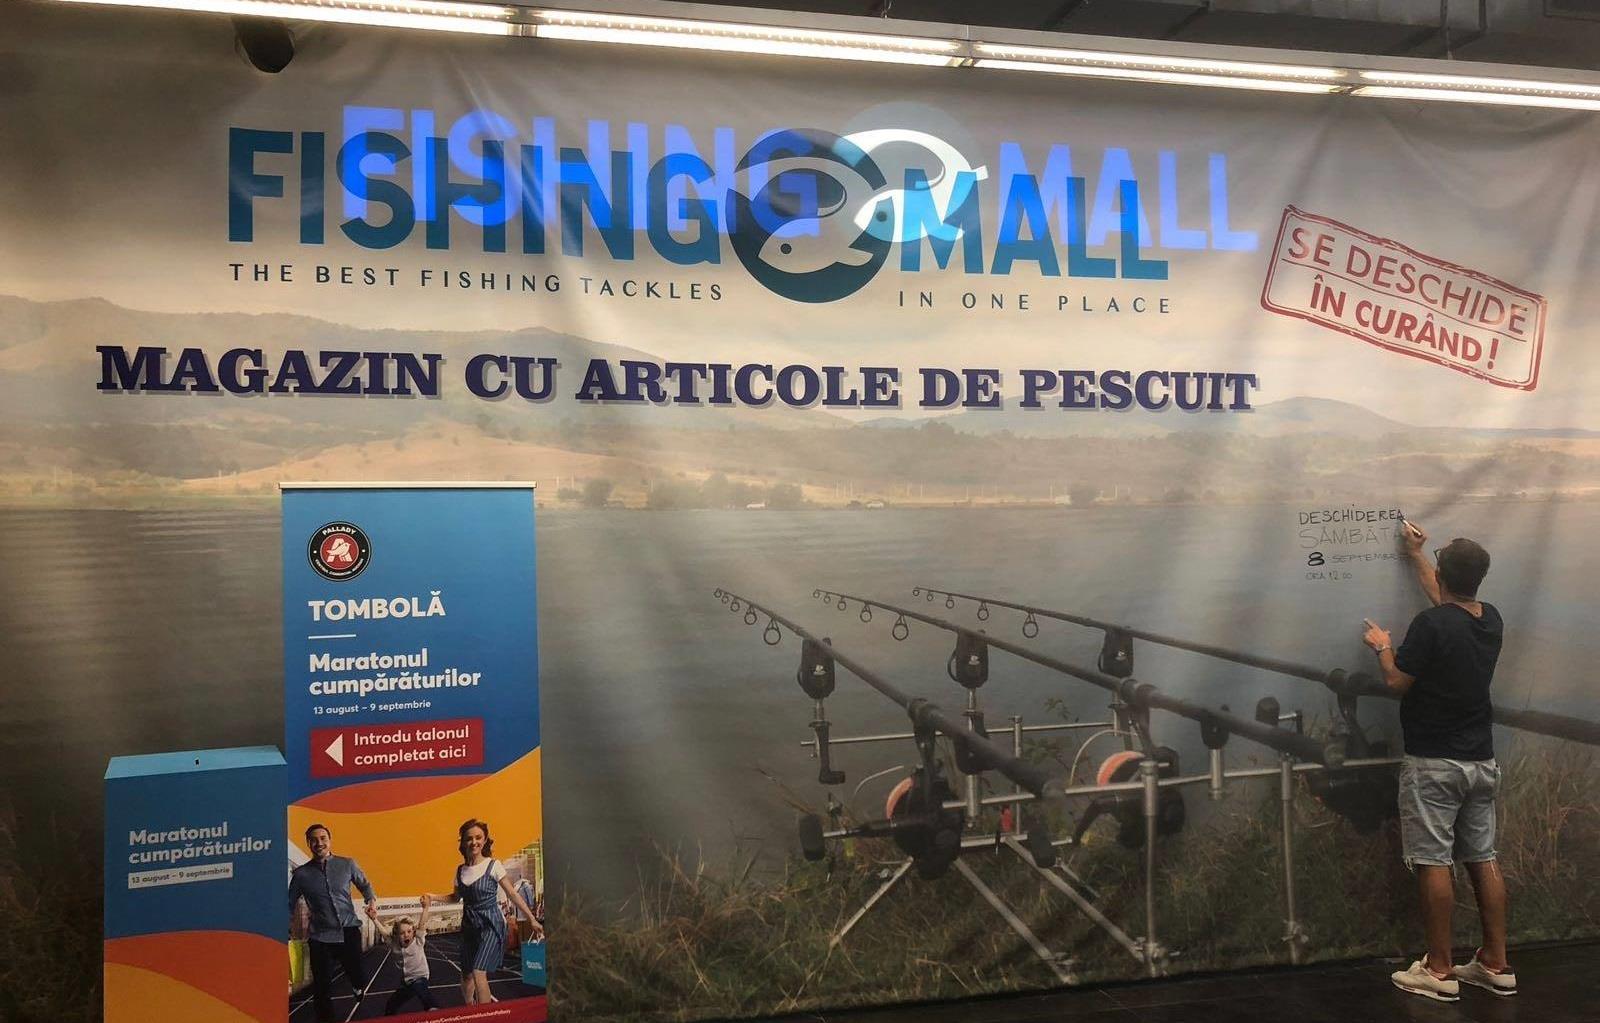 deschidere fishing mall